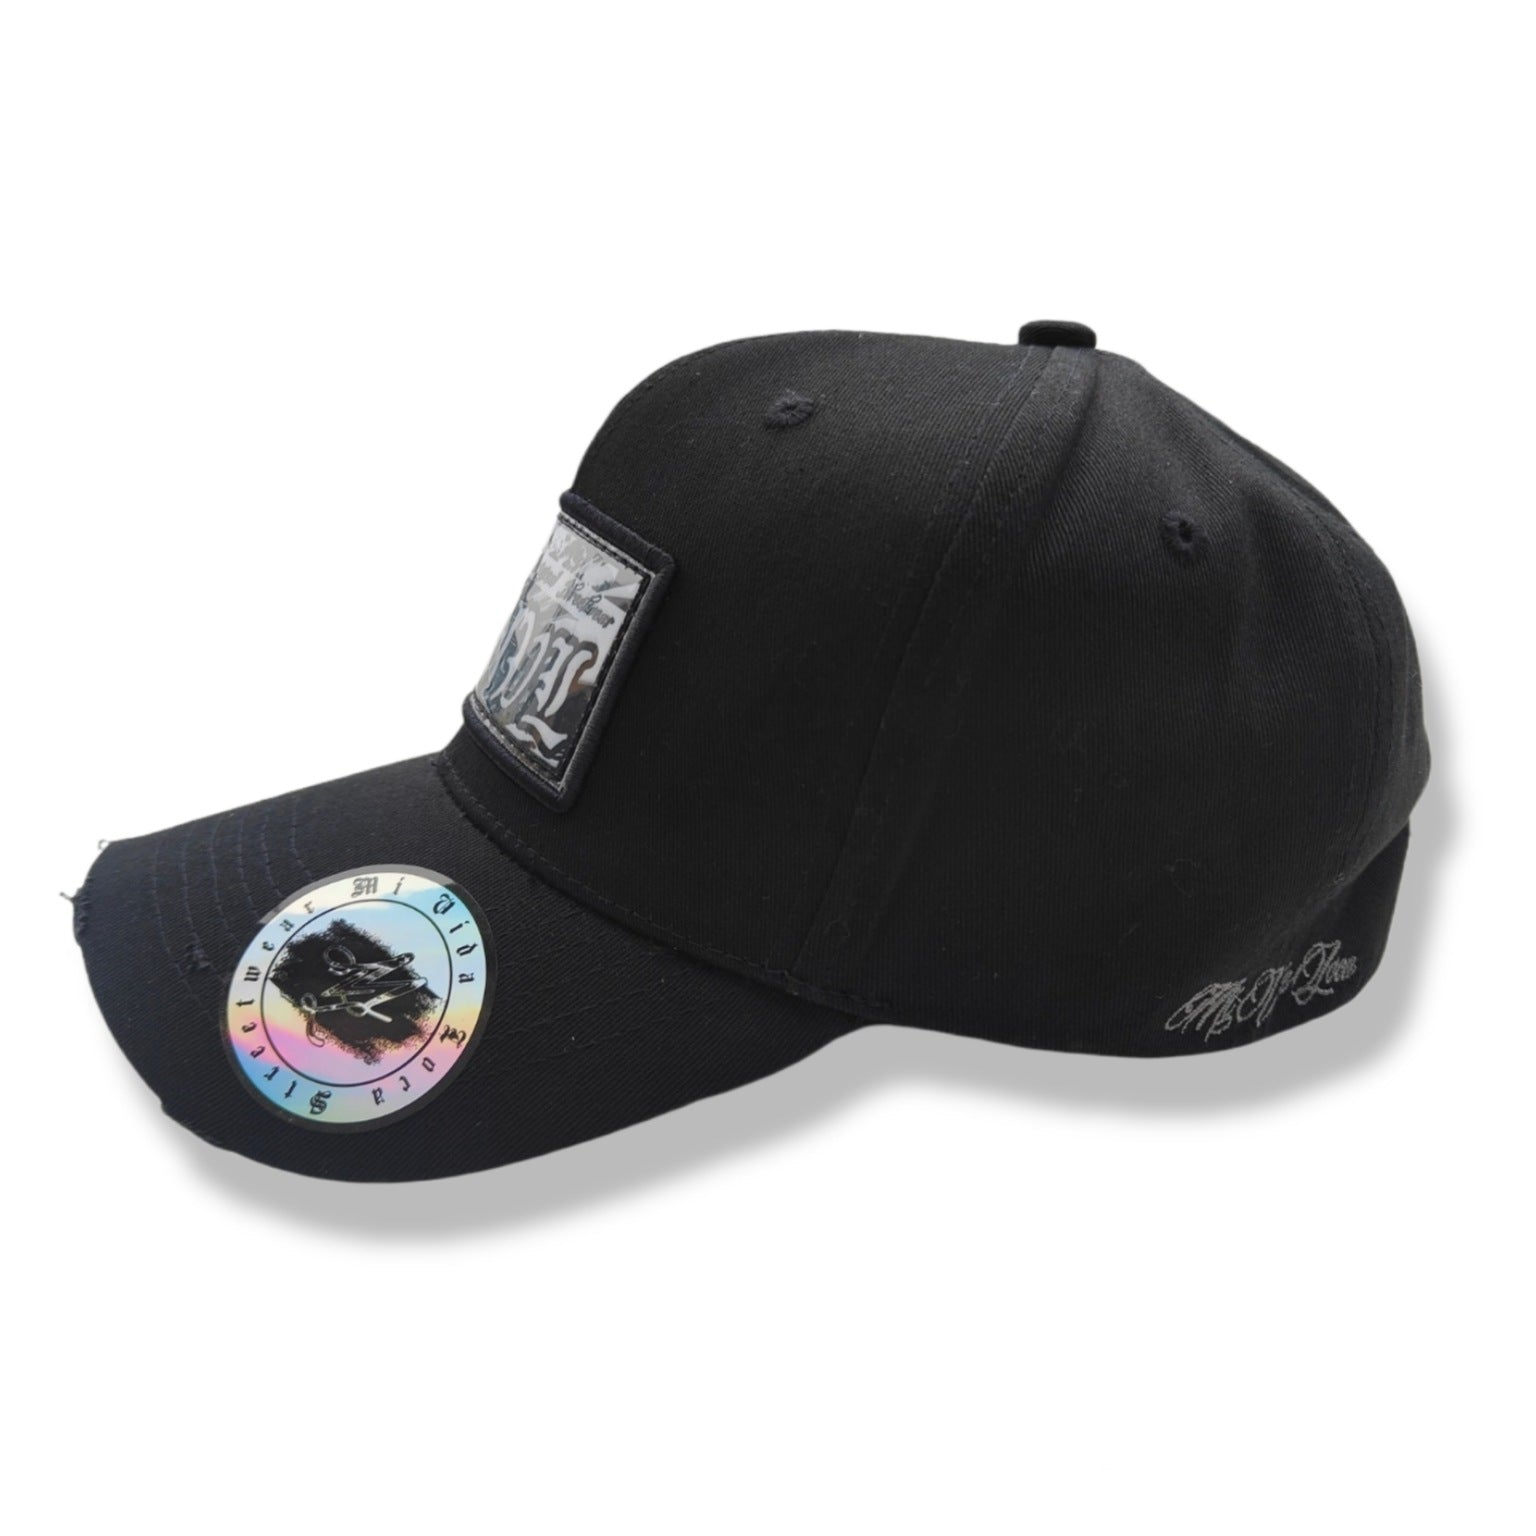 MVL Original streetwear curved cap - black